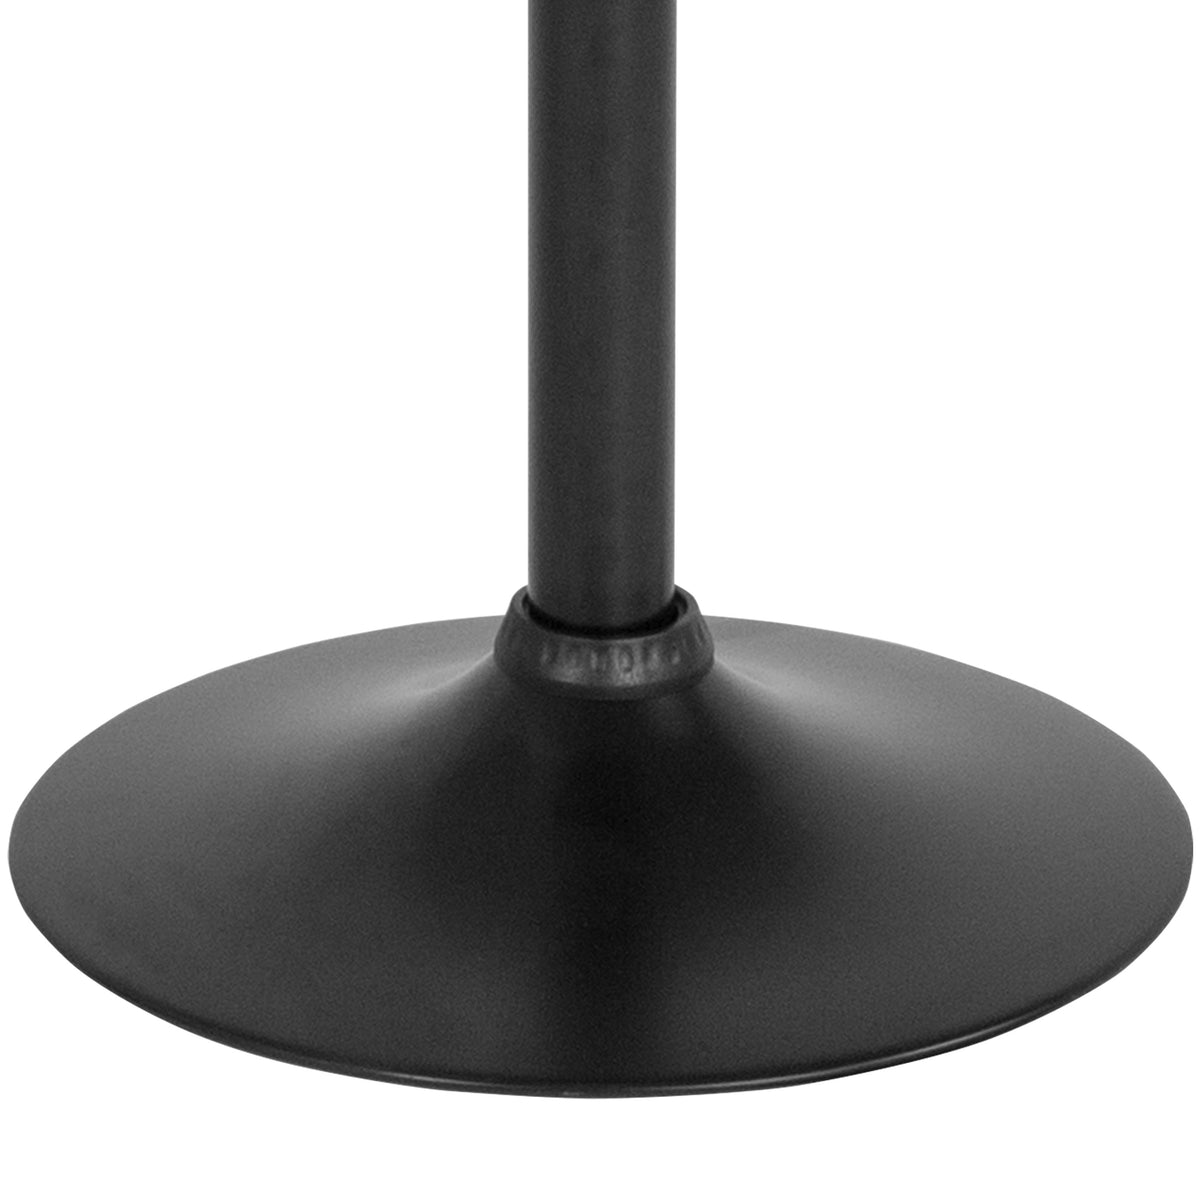 Black |#| Adjustable Height Retro Barstool with Ergonomic Molded Seat in Black Finish